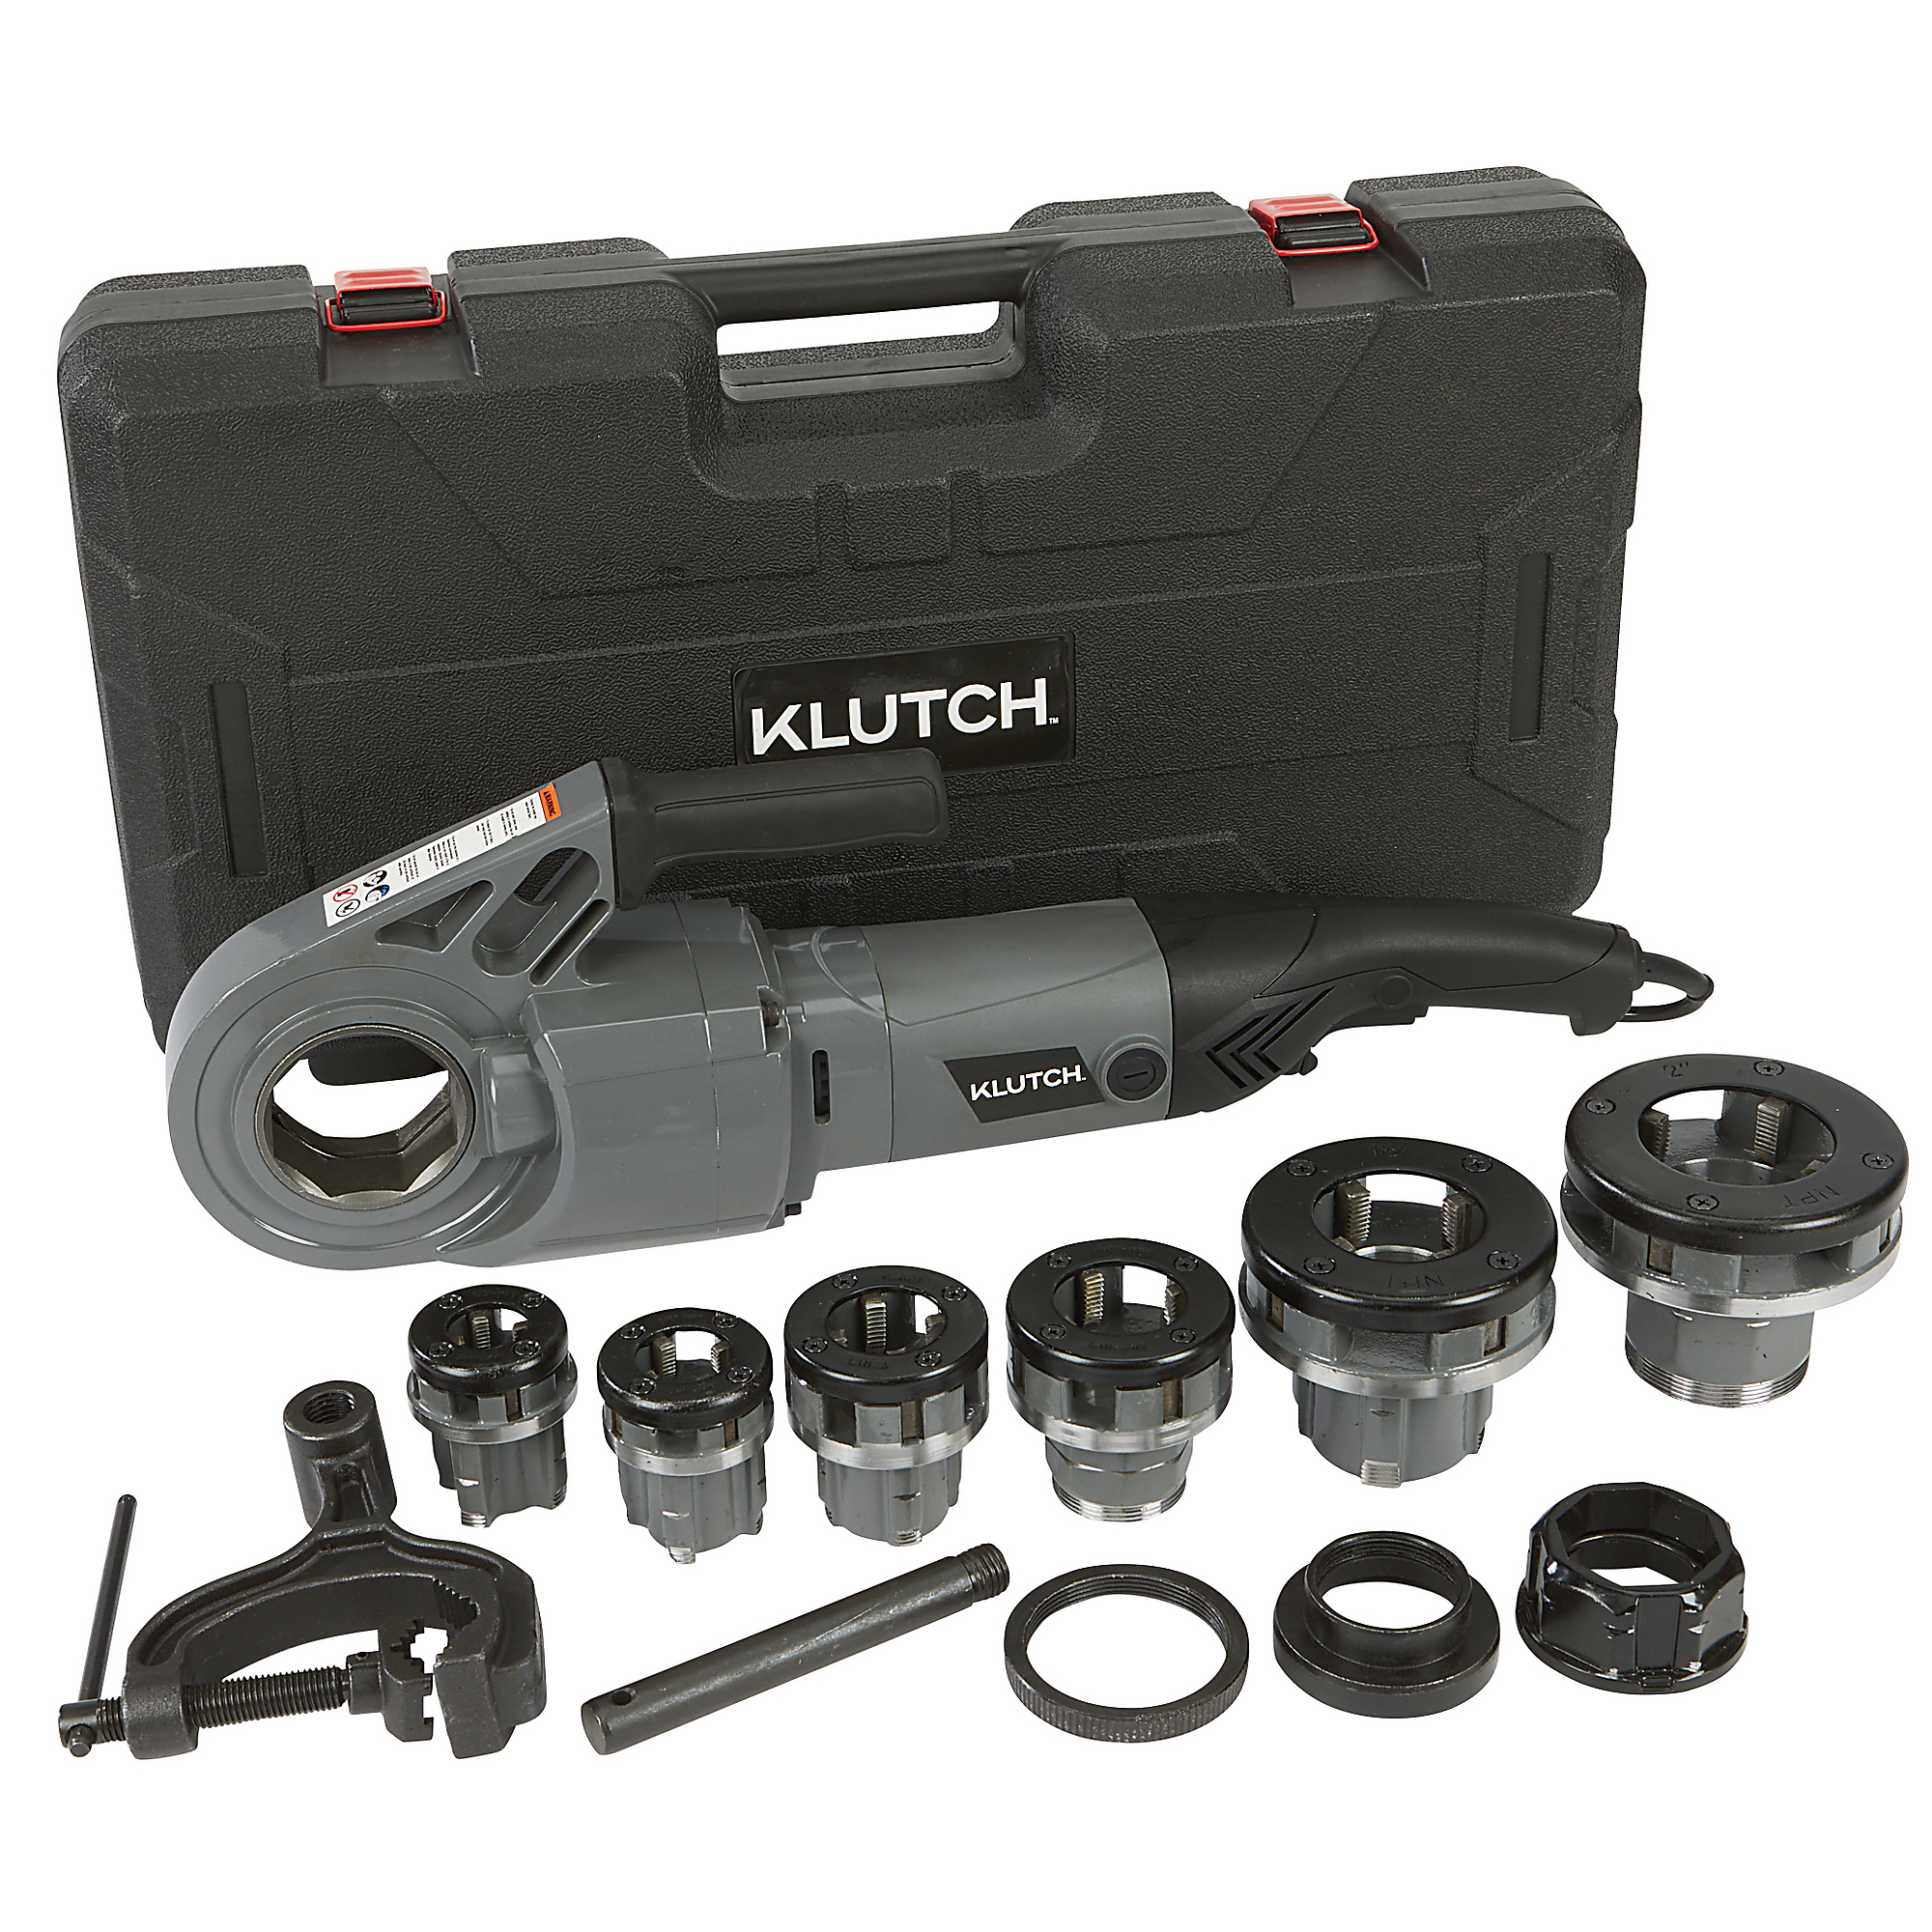 Klutch 2Inch Portabble Pipe Threader, 6 Dies, 28 RPM, 10 Amps, Model 204507003001